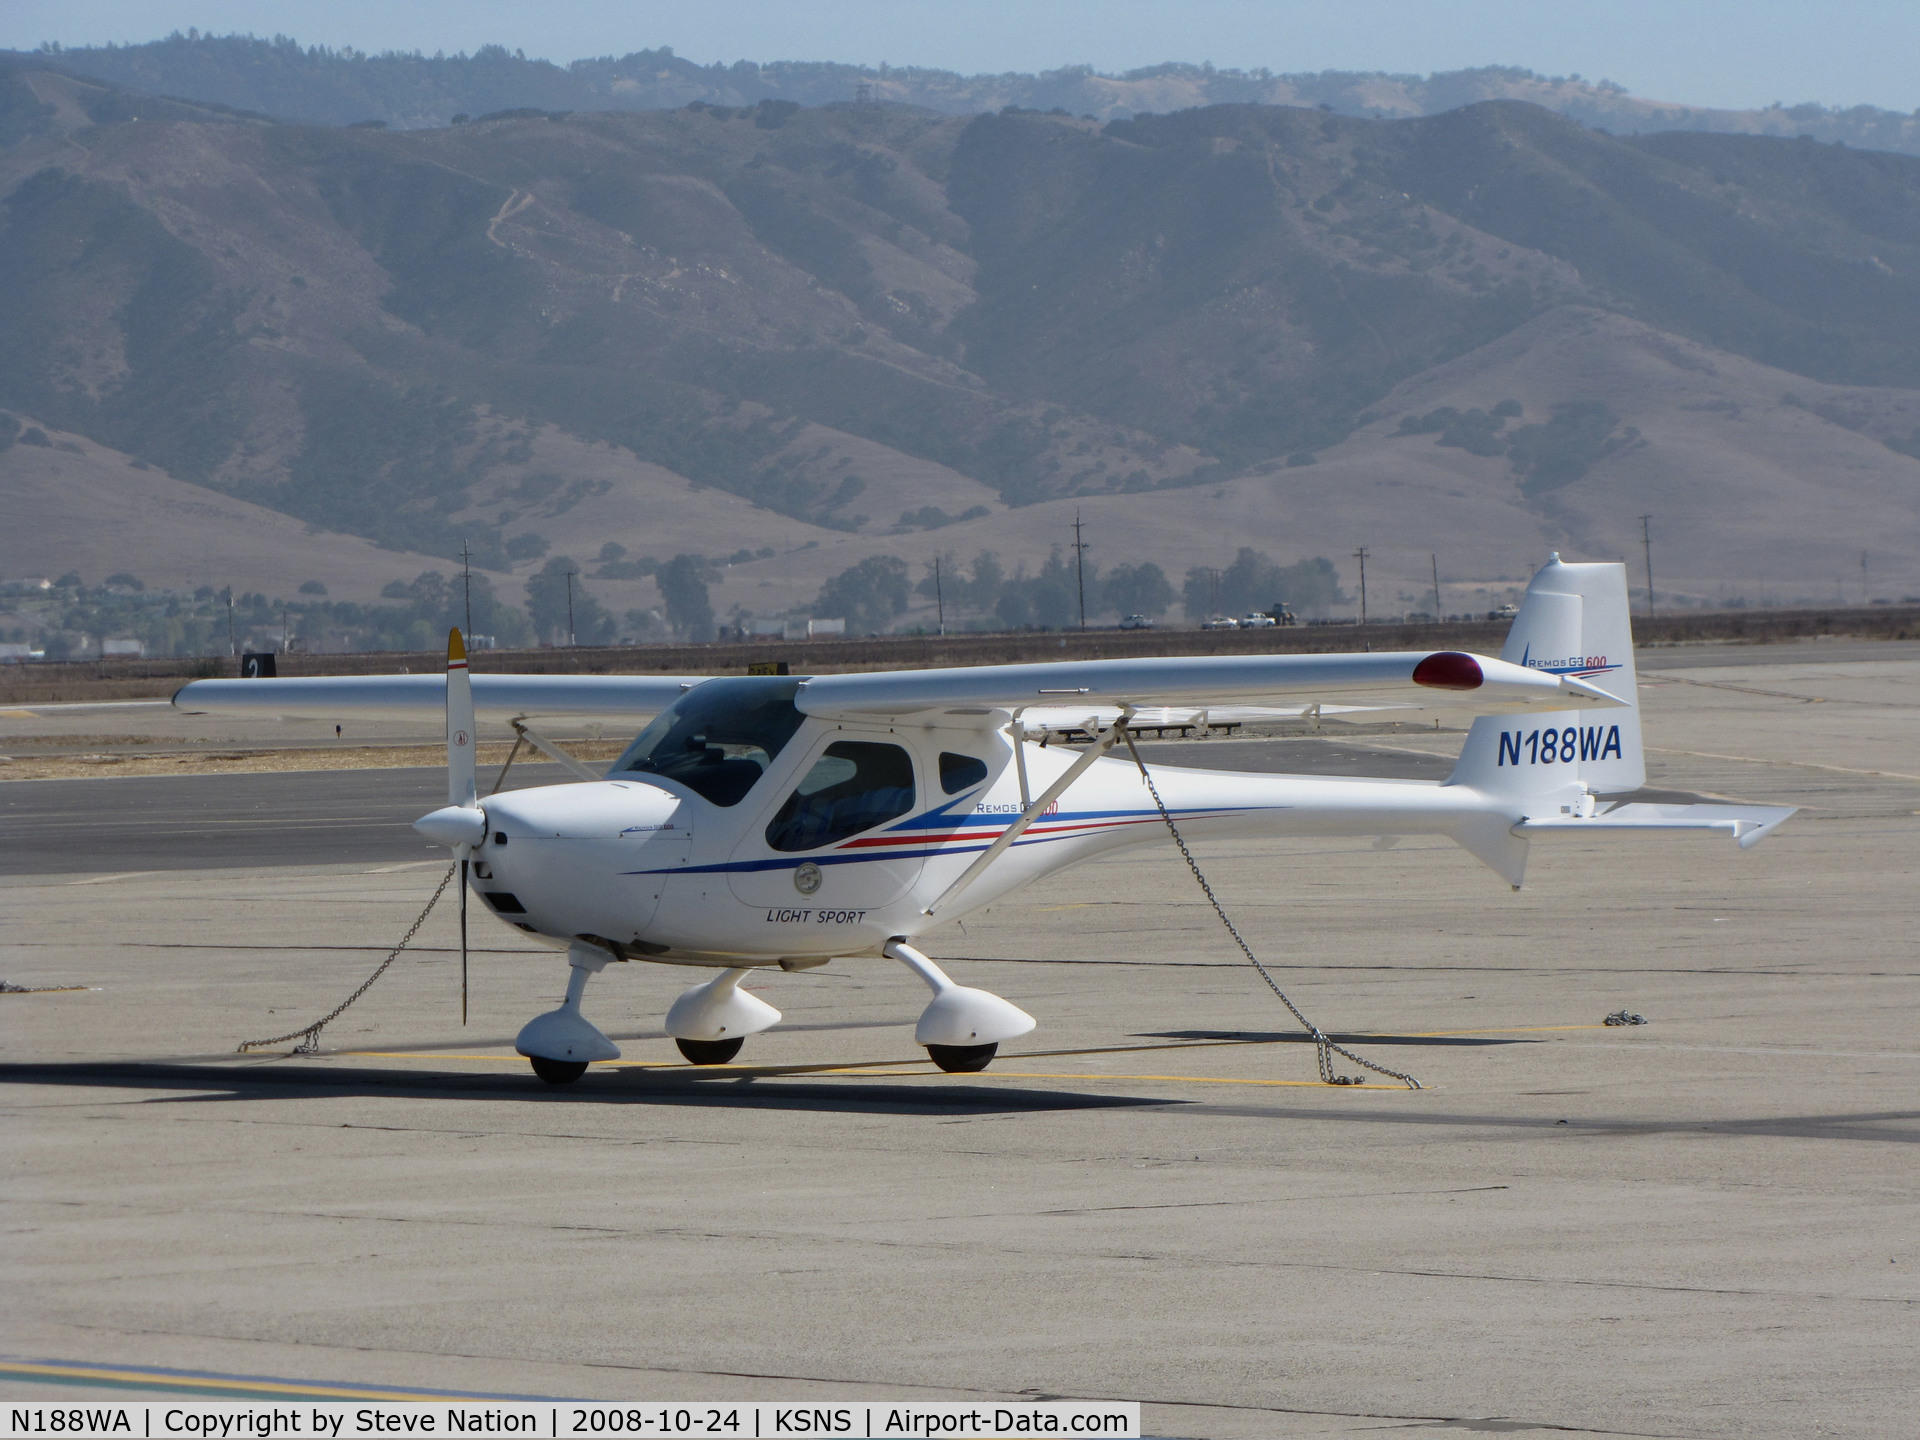 N188WA, 2007 Remos G-3/600 Mirage C/N 188, local light sport dealer had this 2007 Remos G-3/600 Mirage @ Salinas Municipal Airport, CA